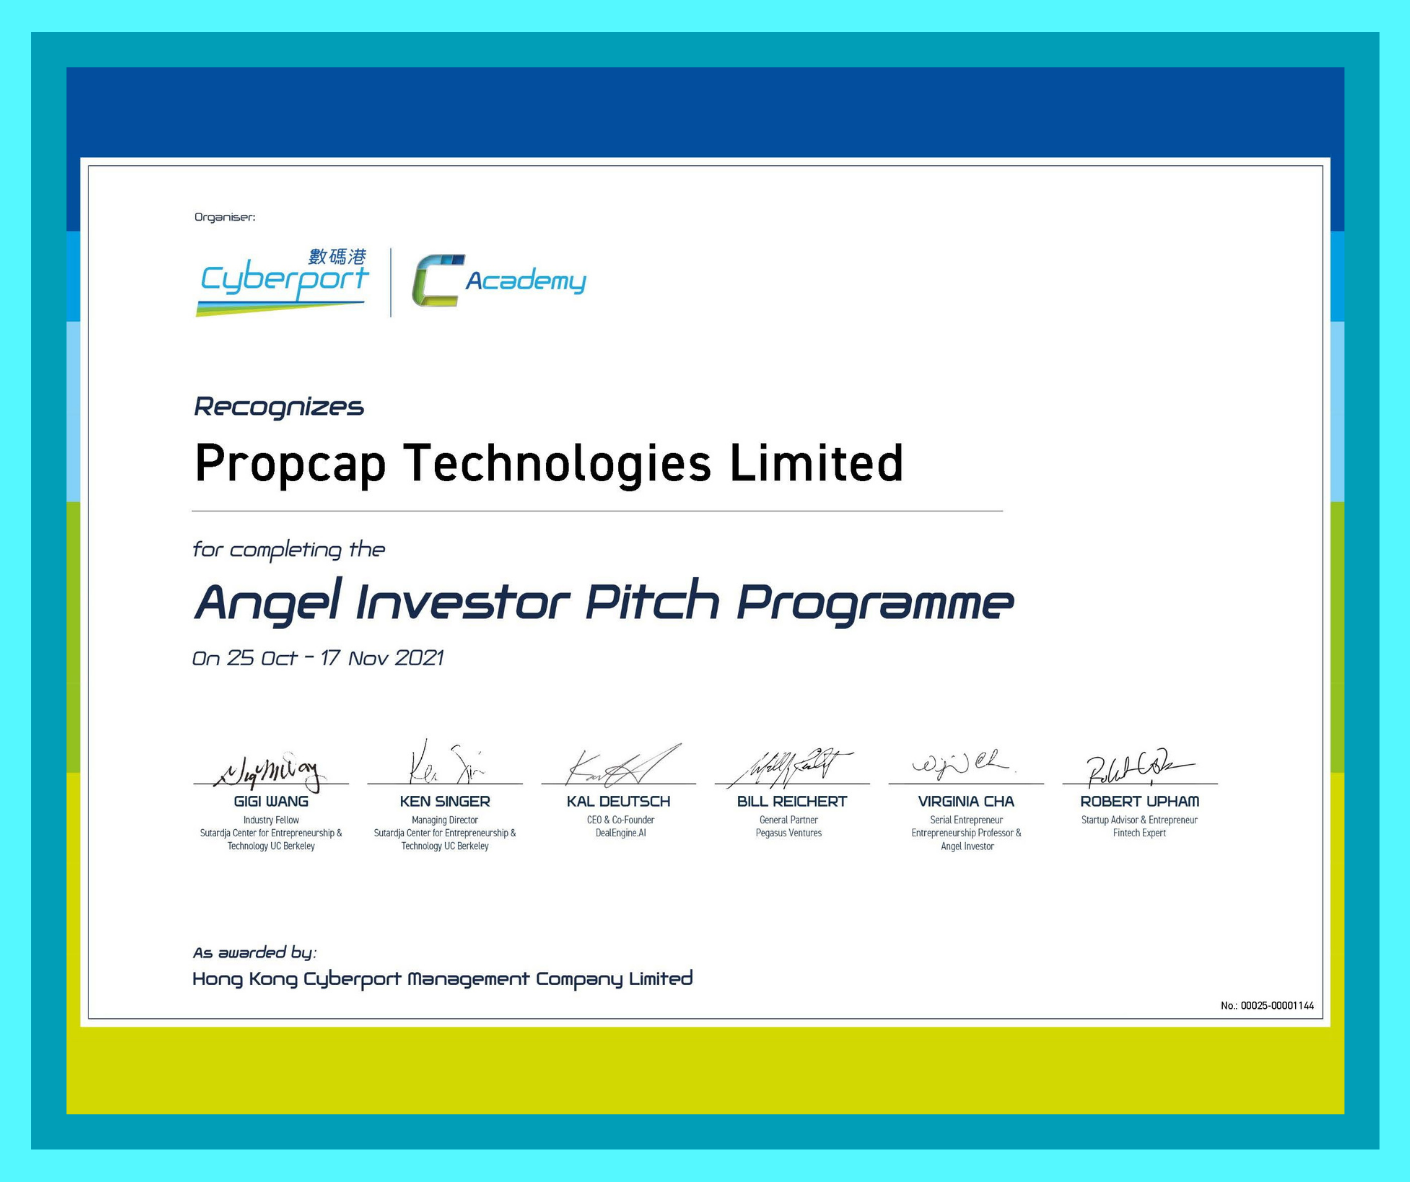 PropCap X Cyberport – Angel Investor Pitch Programme